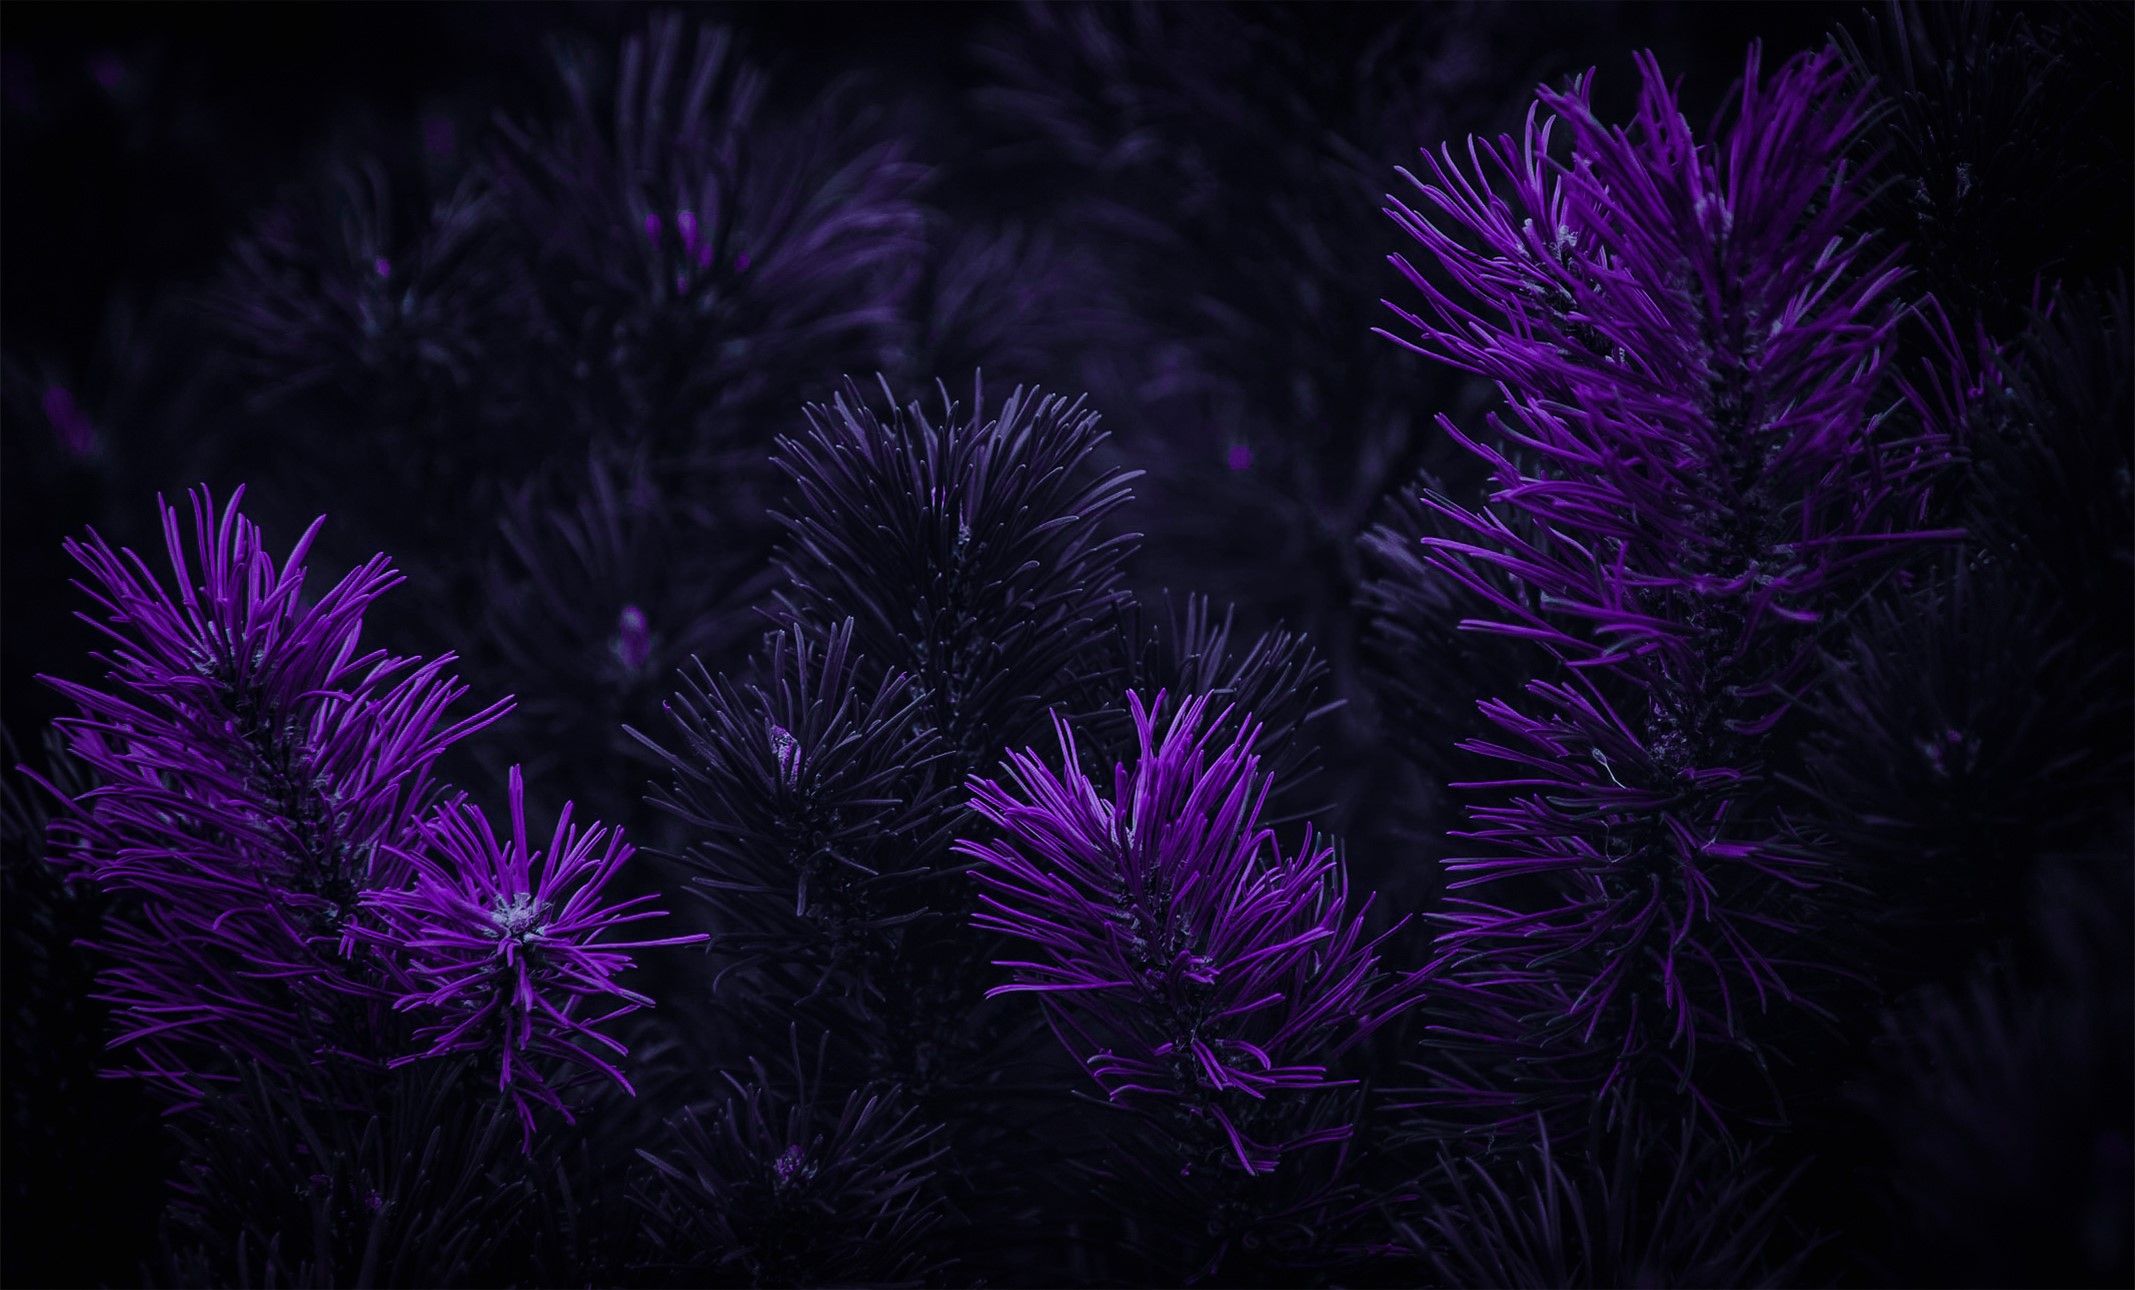 A close up of purple pine needles on a black background - Dark purple